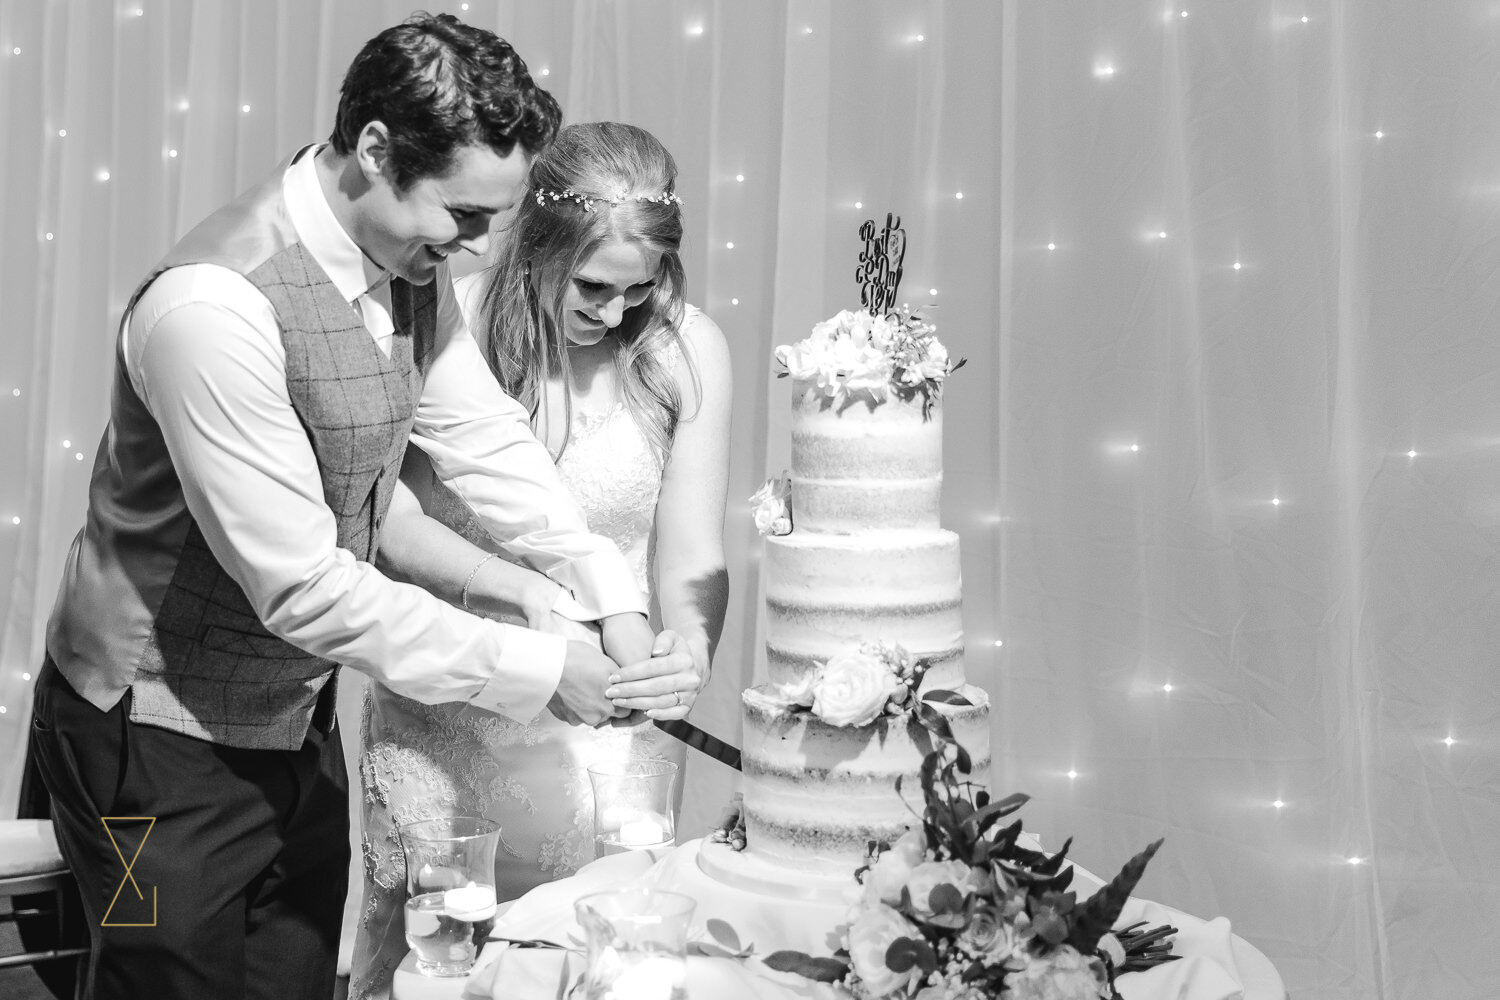 Bride-and-groom-cutting-cake-Cheshire-wedding